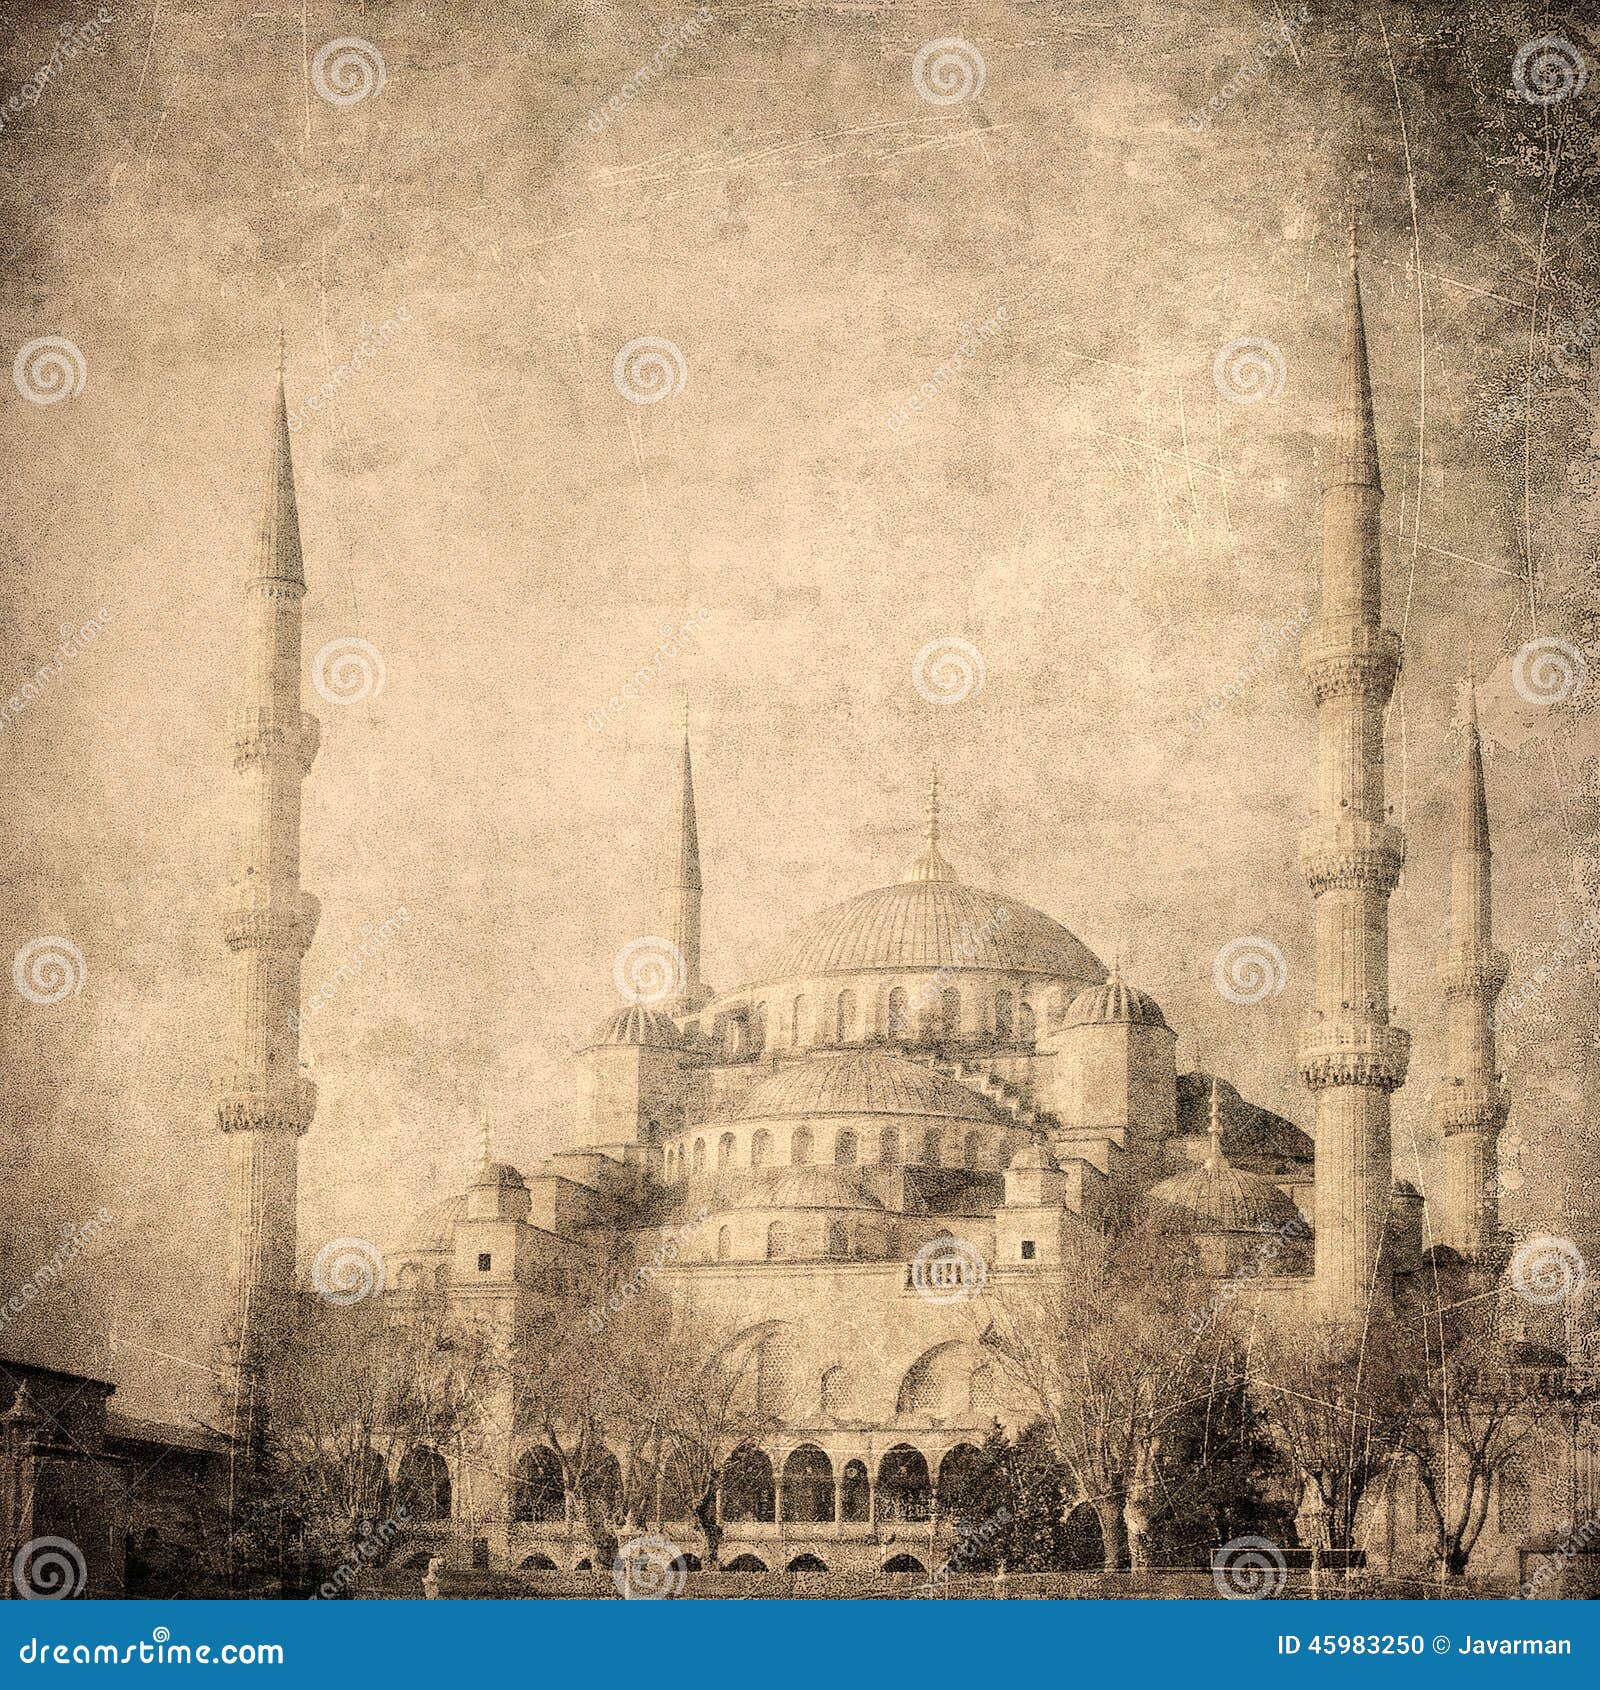 vintage image of blue mosque, istambul